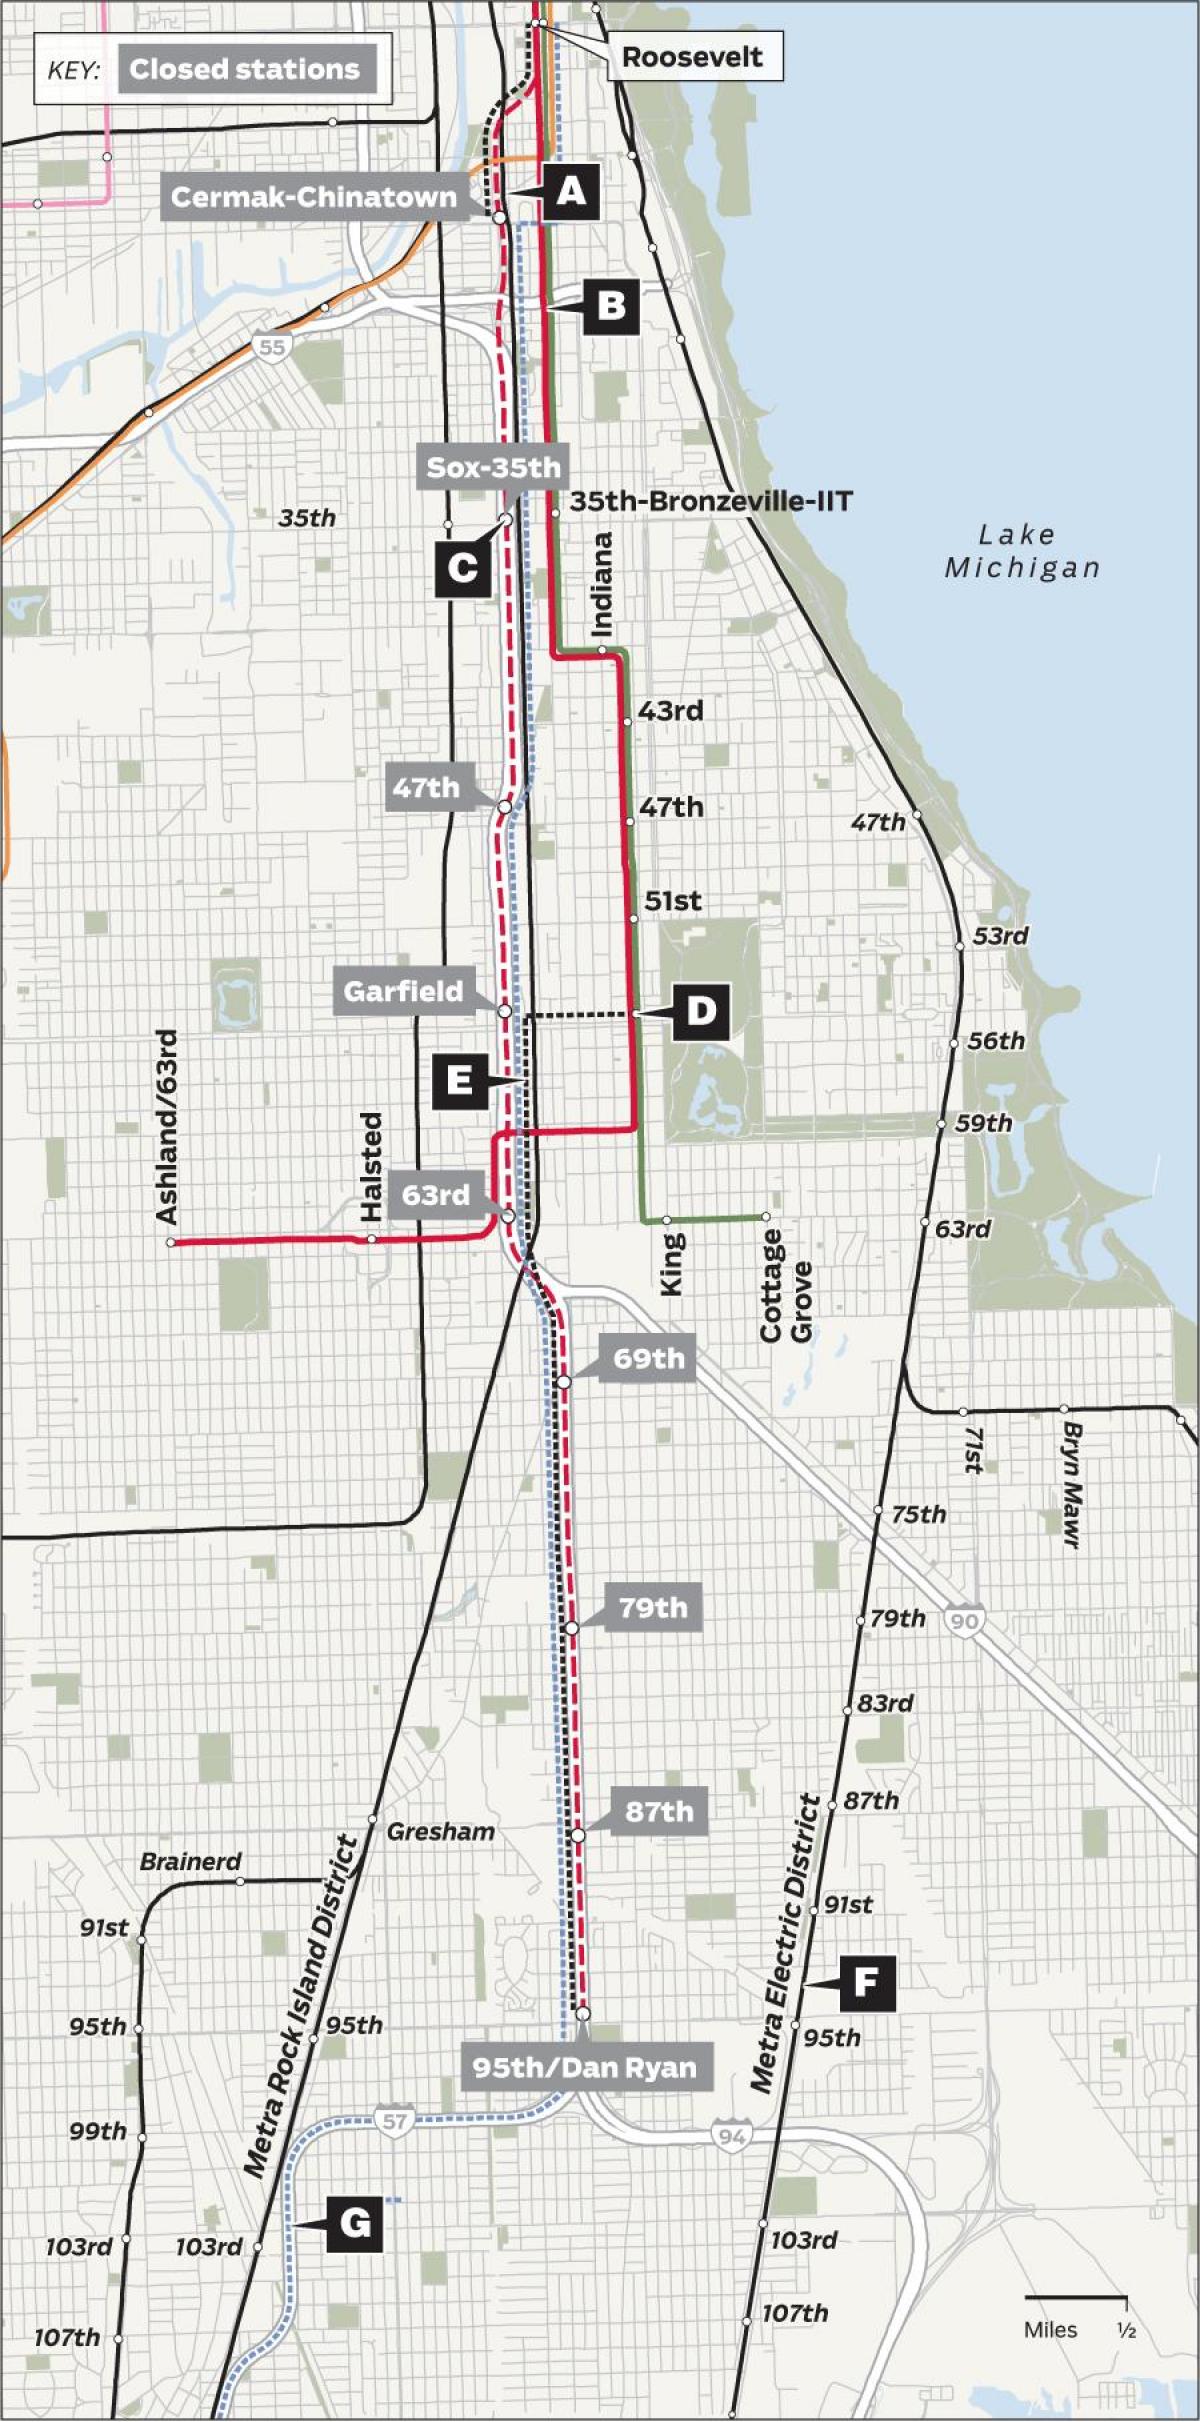 redline Chicago kaart